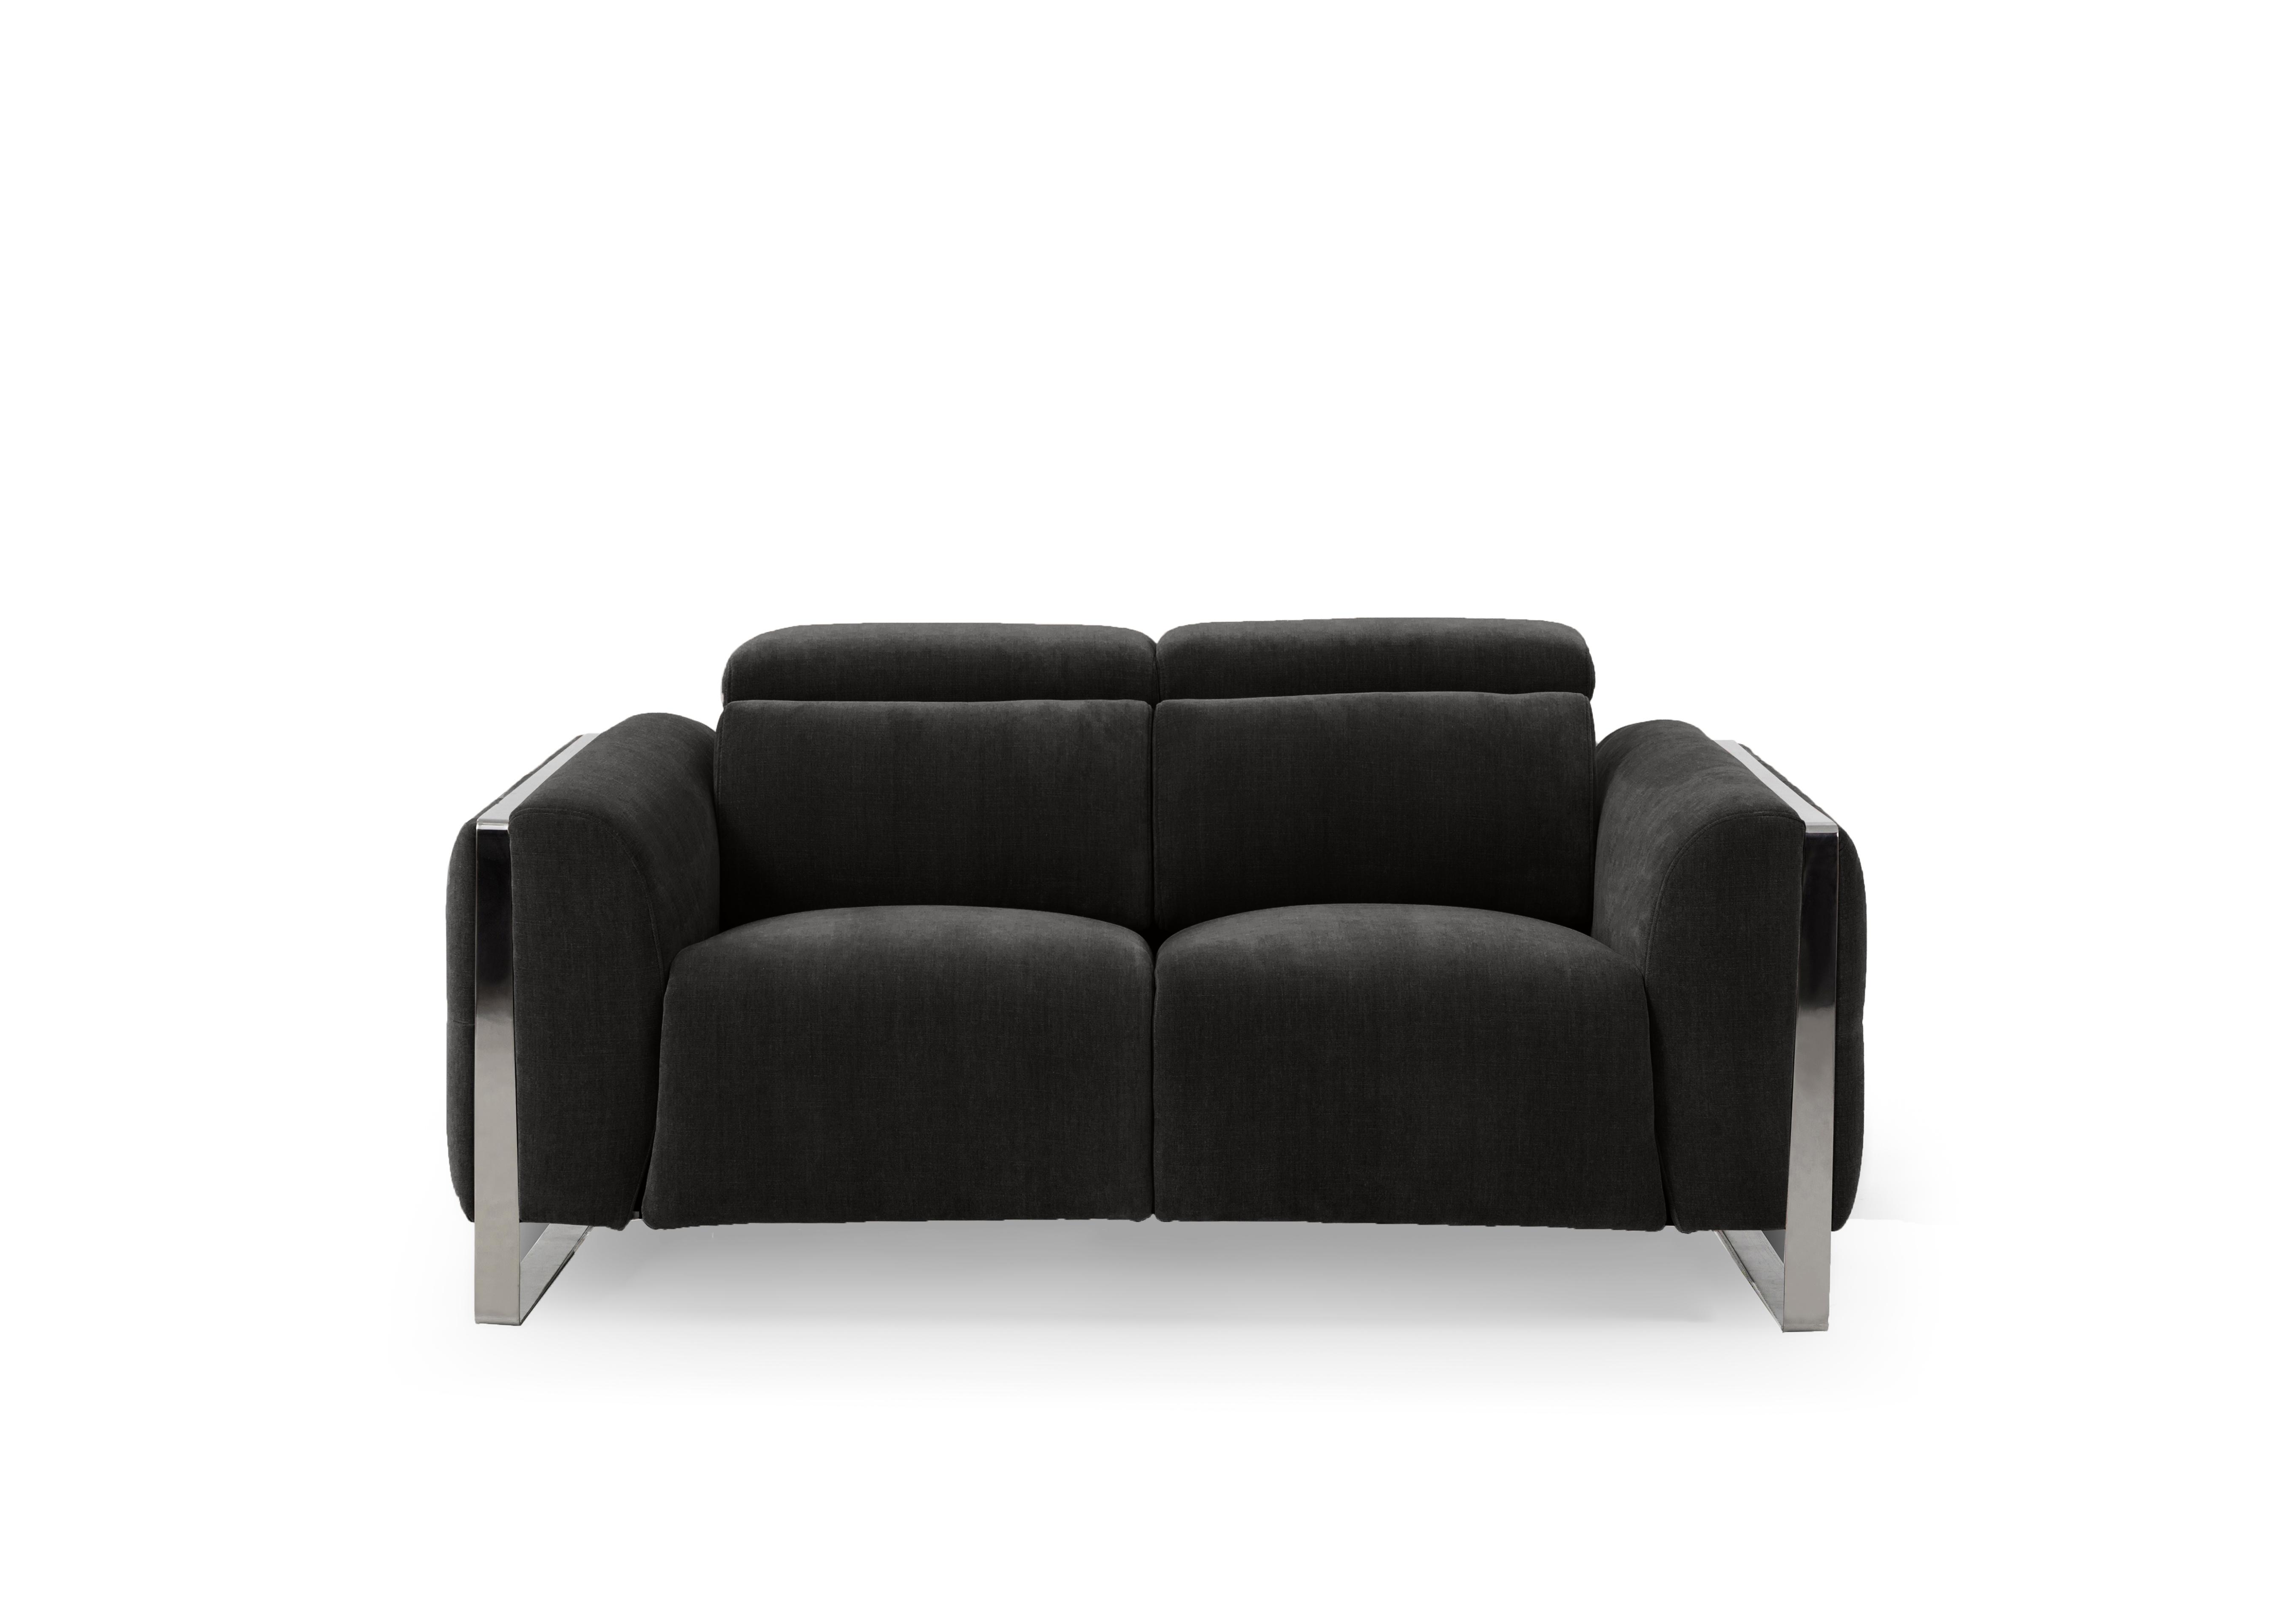 Gisella Fabric 2 Seater Sofa in Manhattan Indigo 58009 on Furniture Village